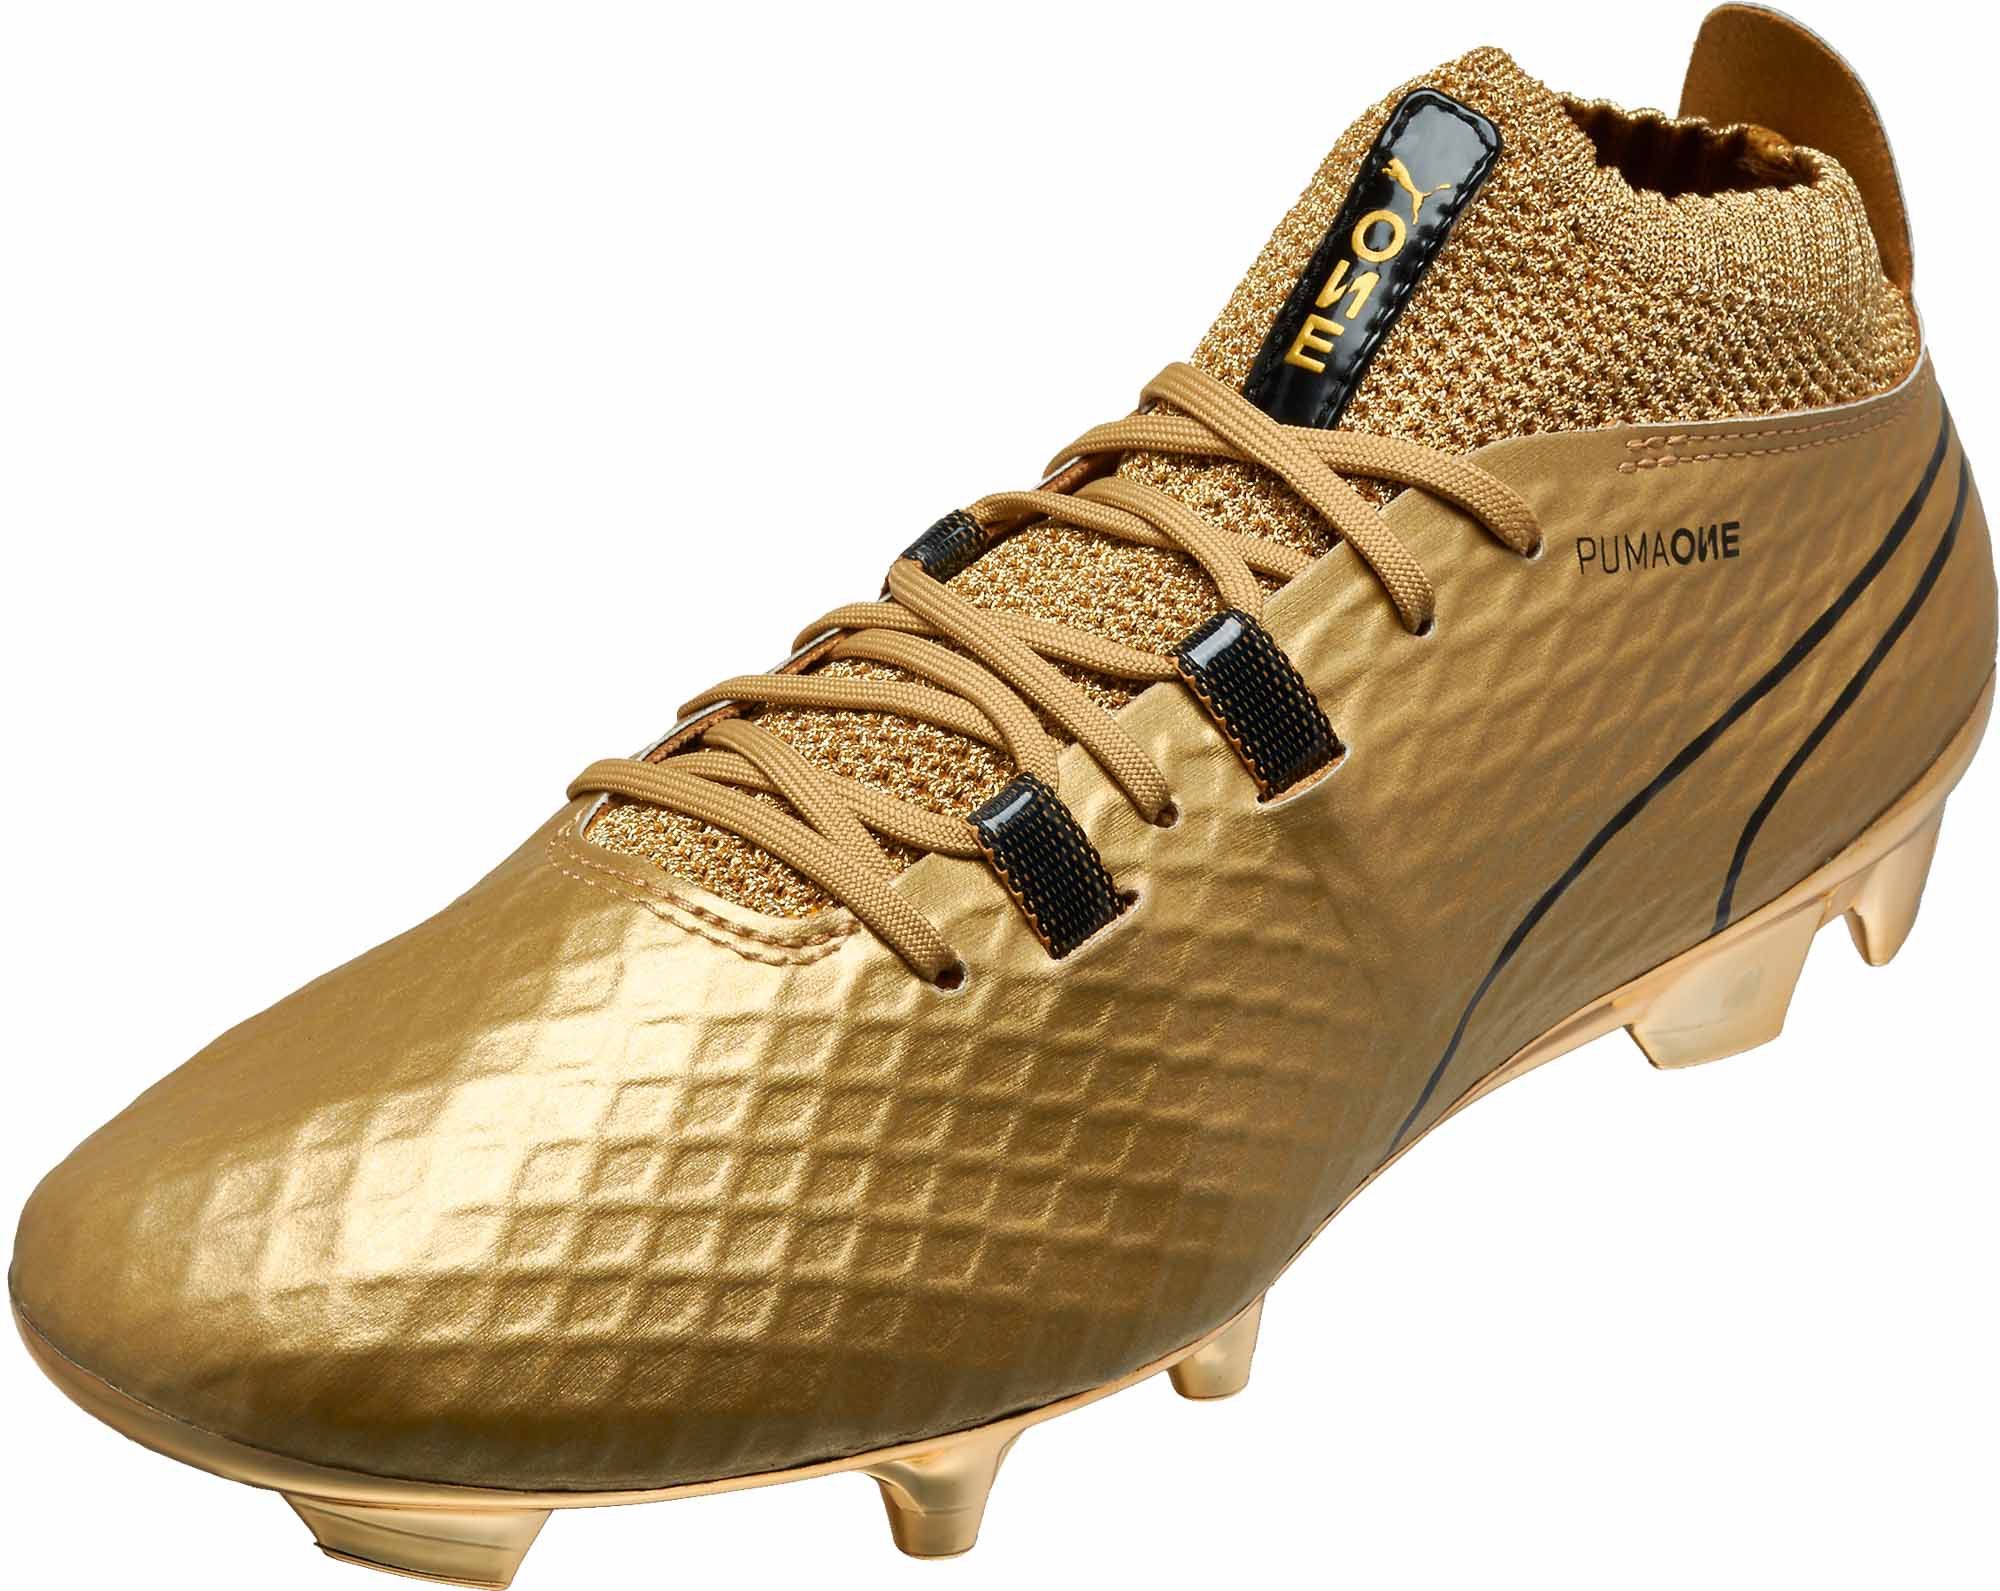 Puma One FG - Gold Puma Soccer Cleats